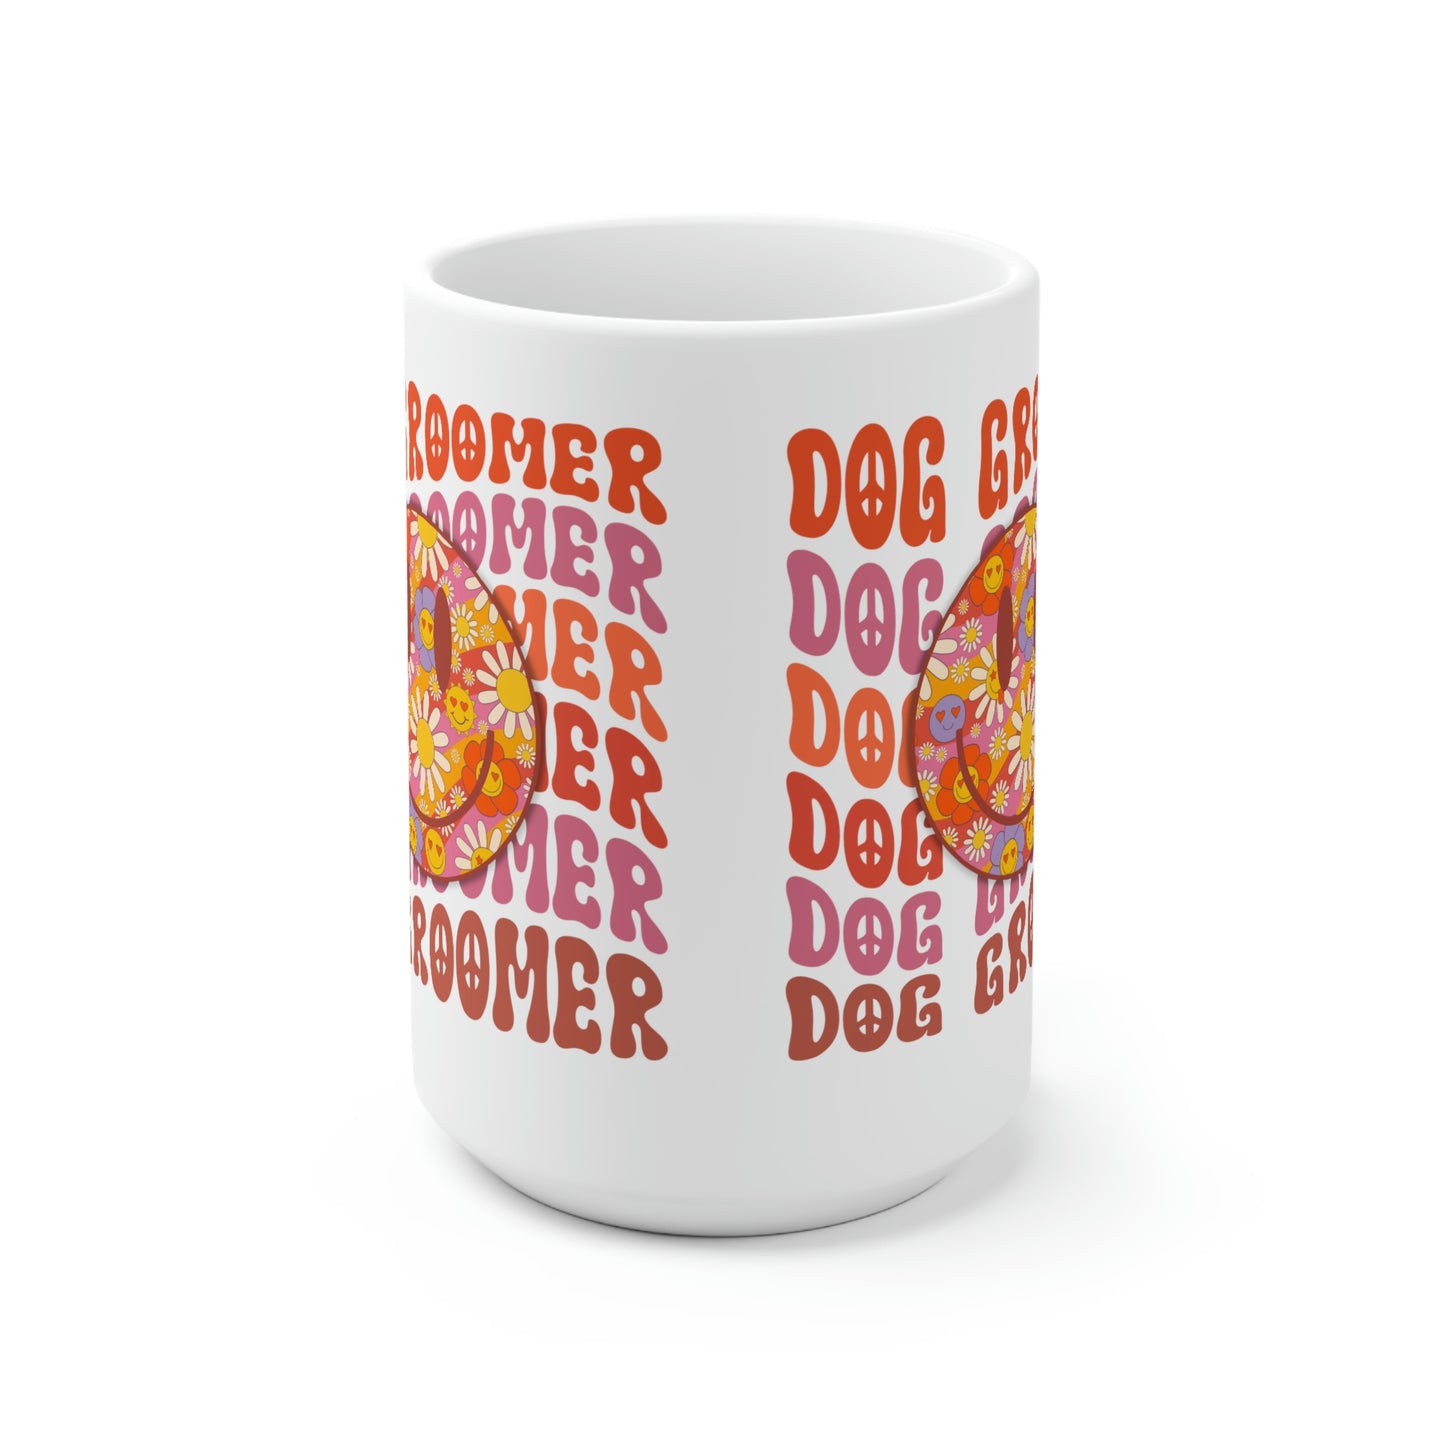 Dog Groomer Ceramic Mug 15oz